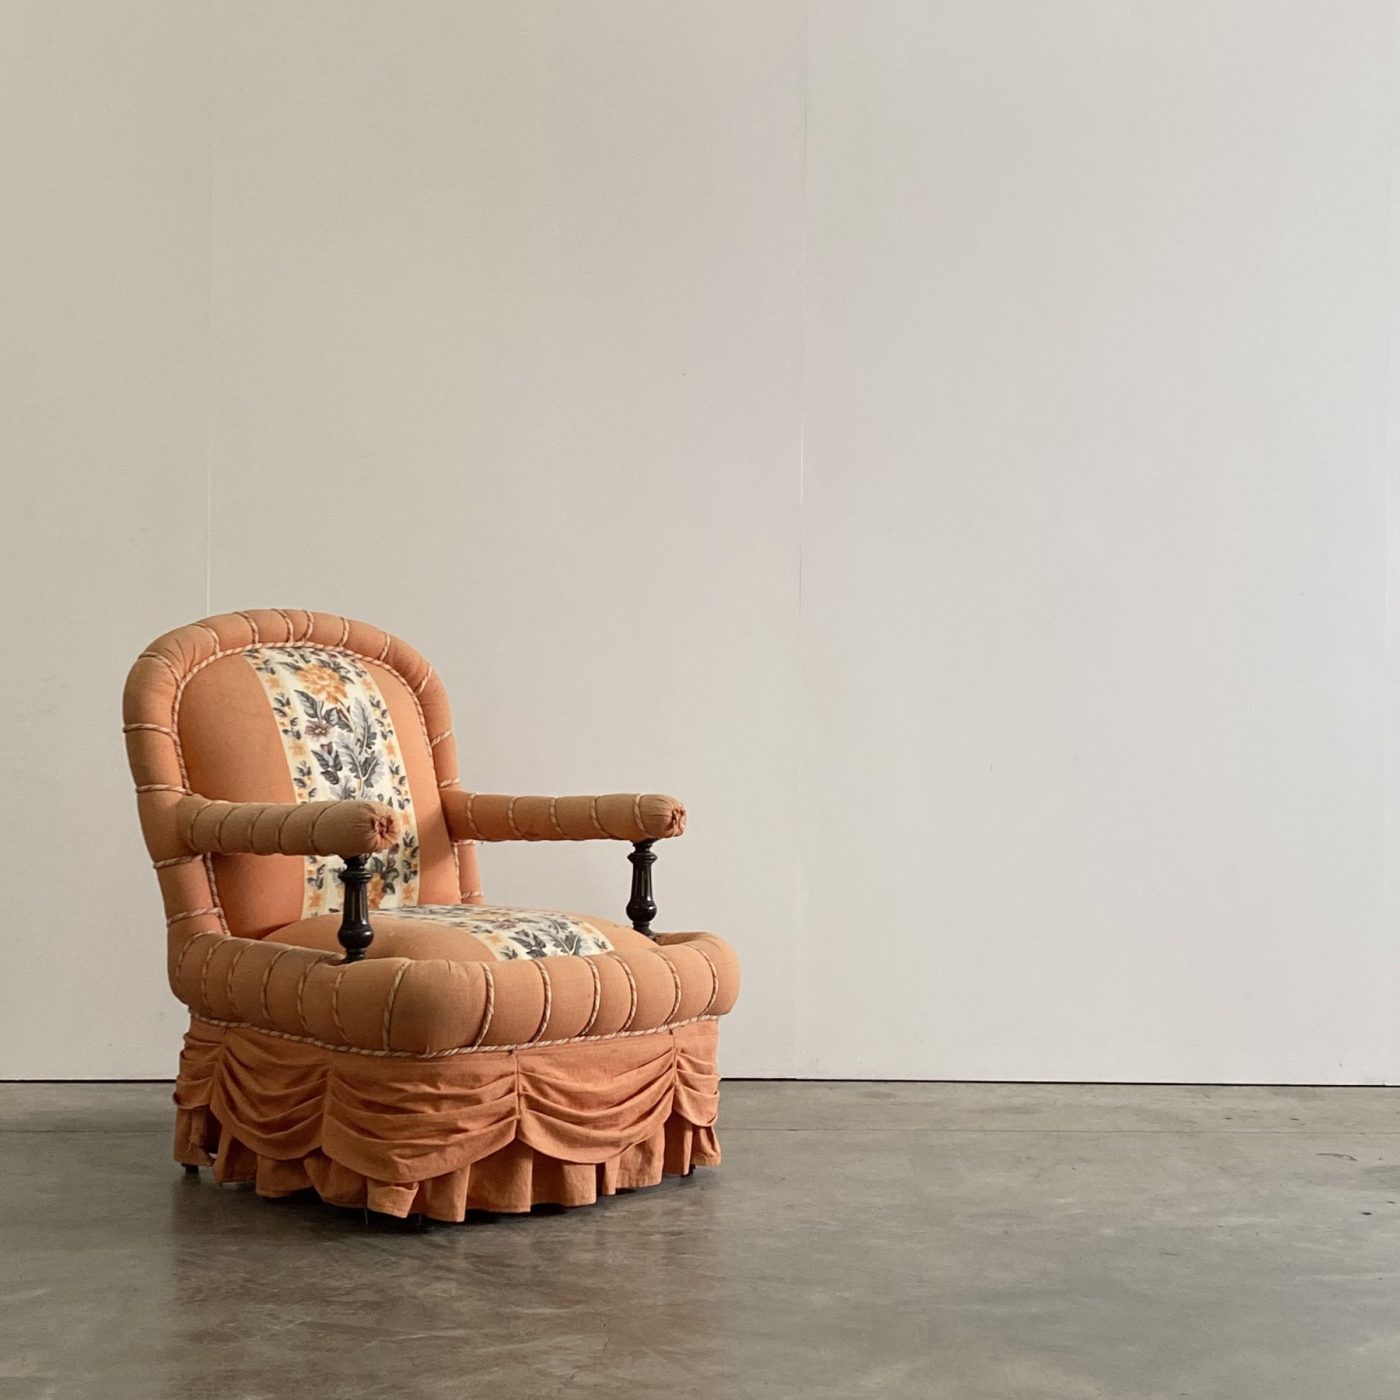 objet-vagabond-napoleon3-armchair0001